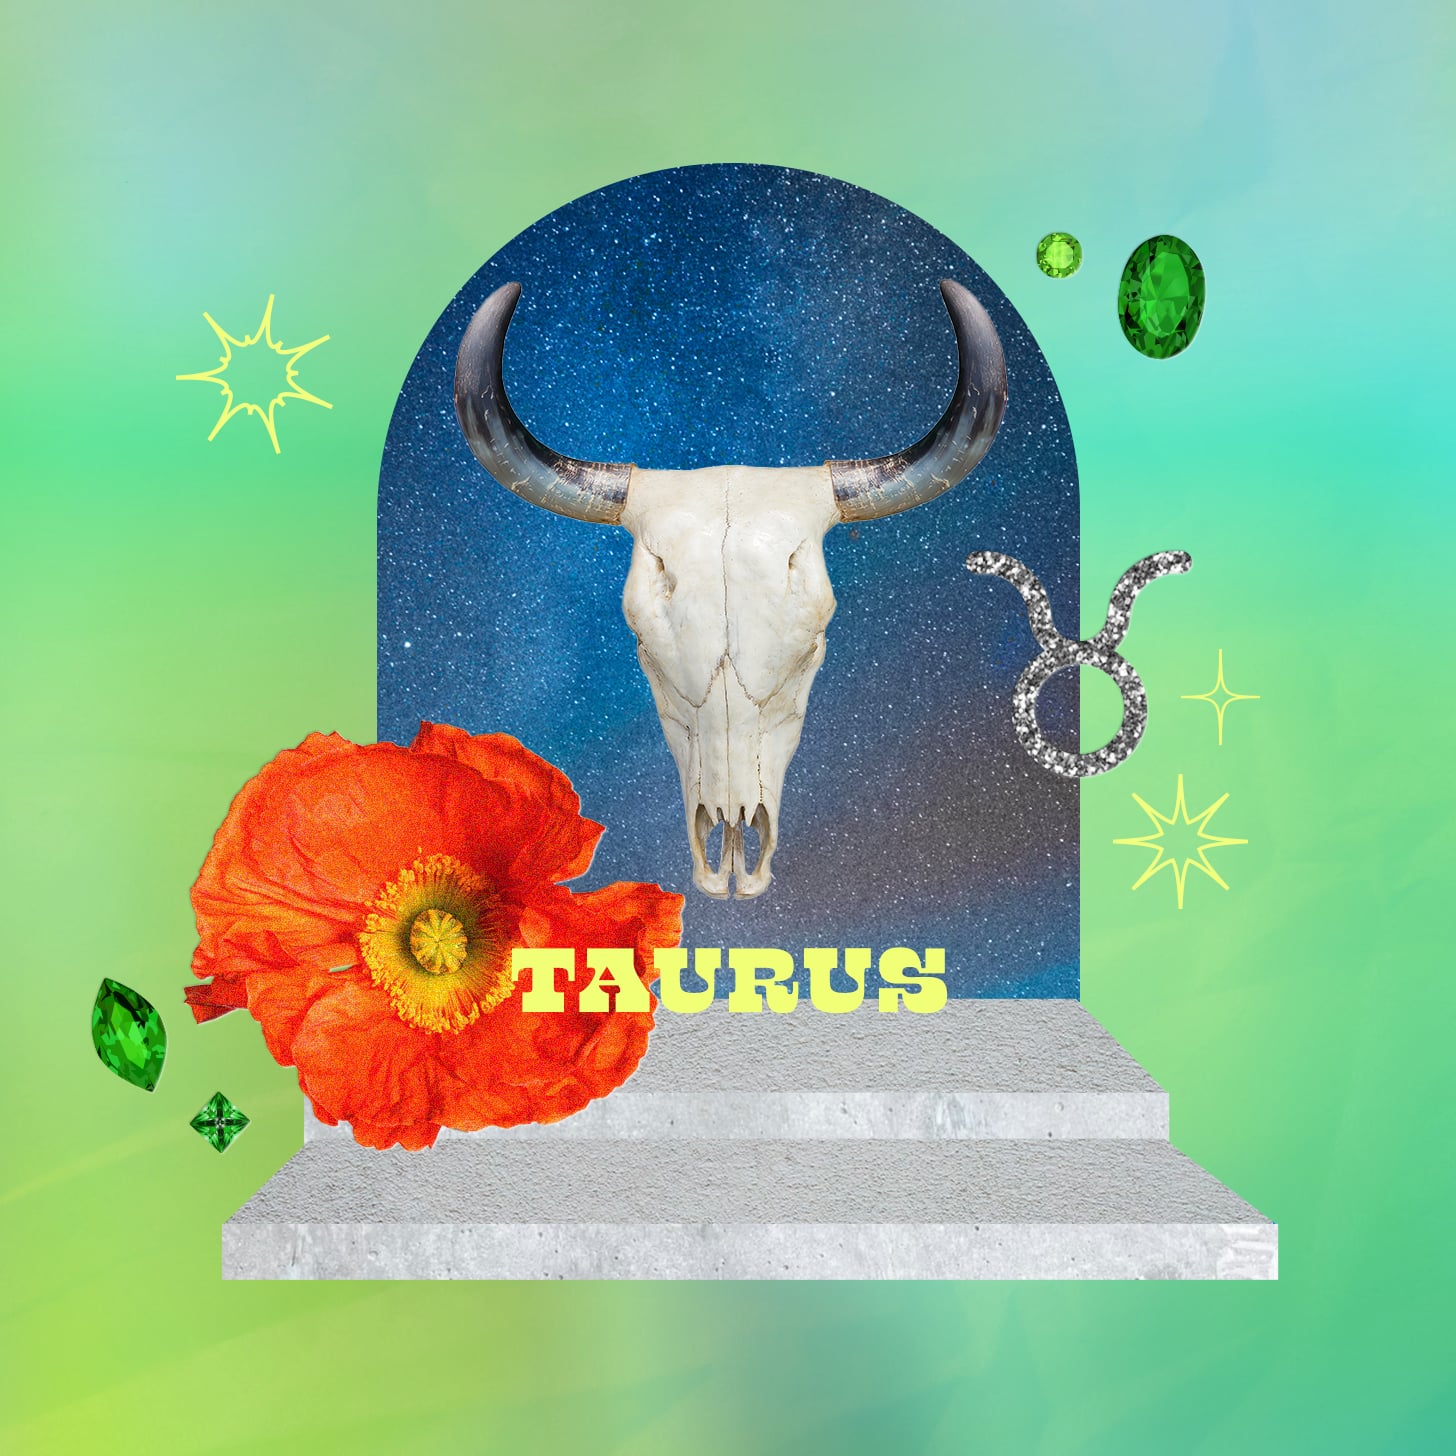 Taurus weekly horoscope for December 4, 2022